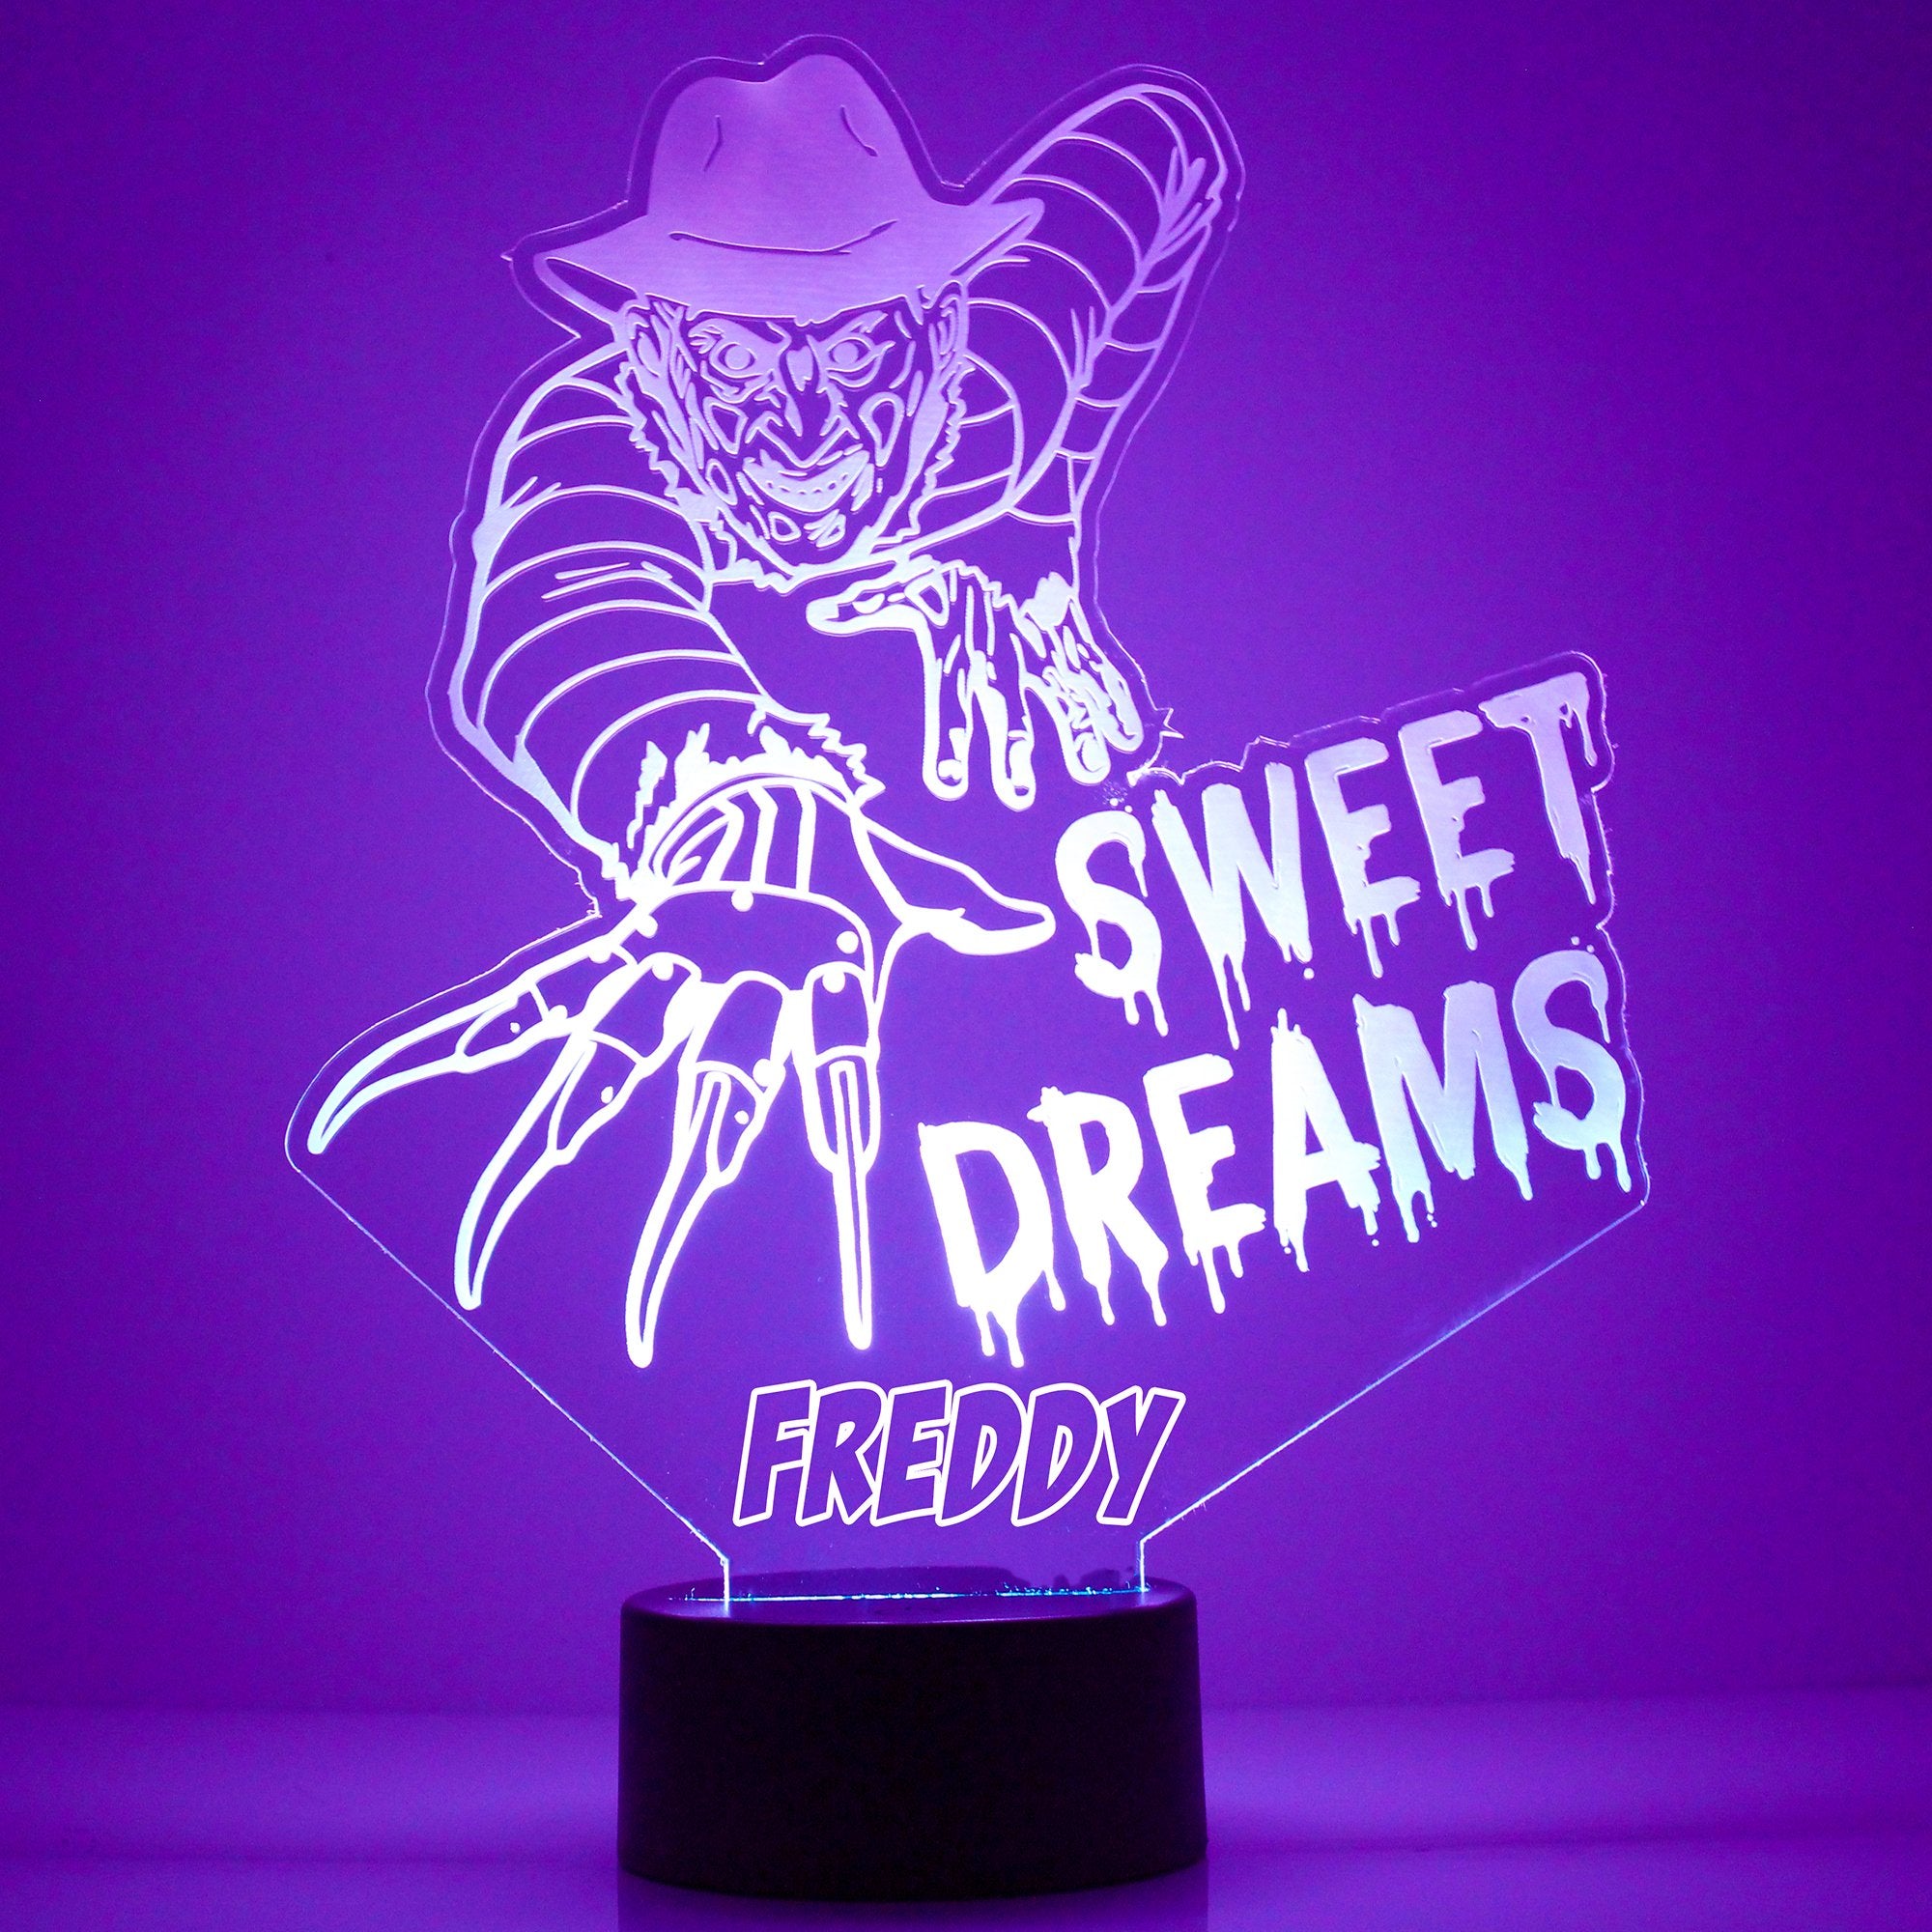 Five Nights At Freddy's Night Light